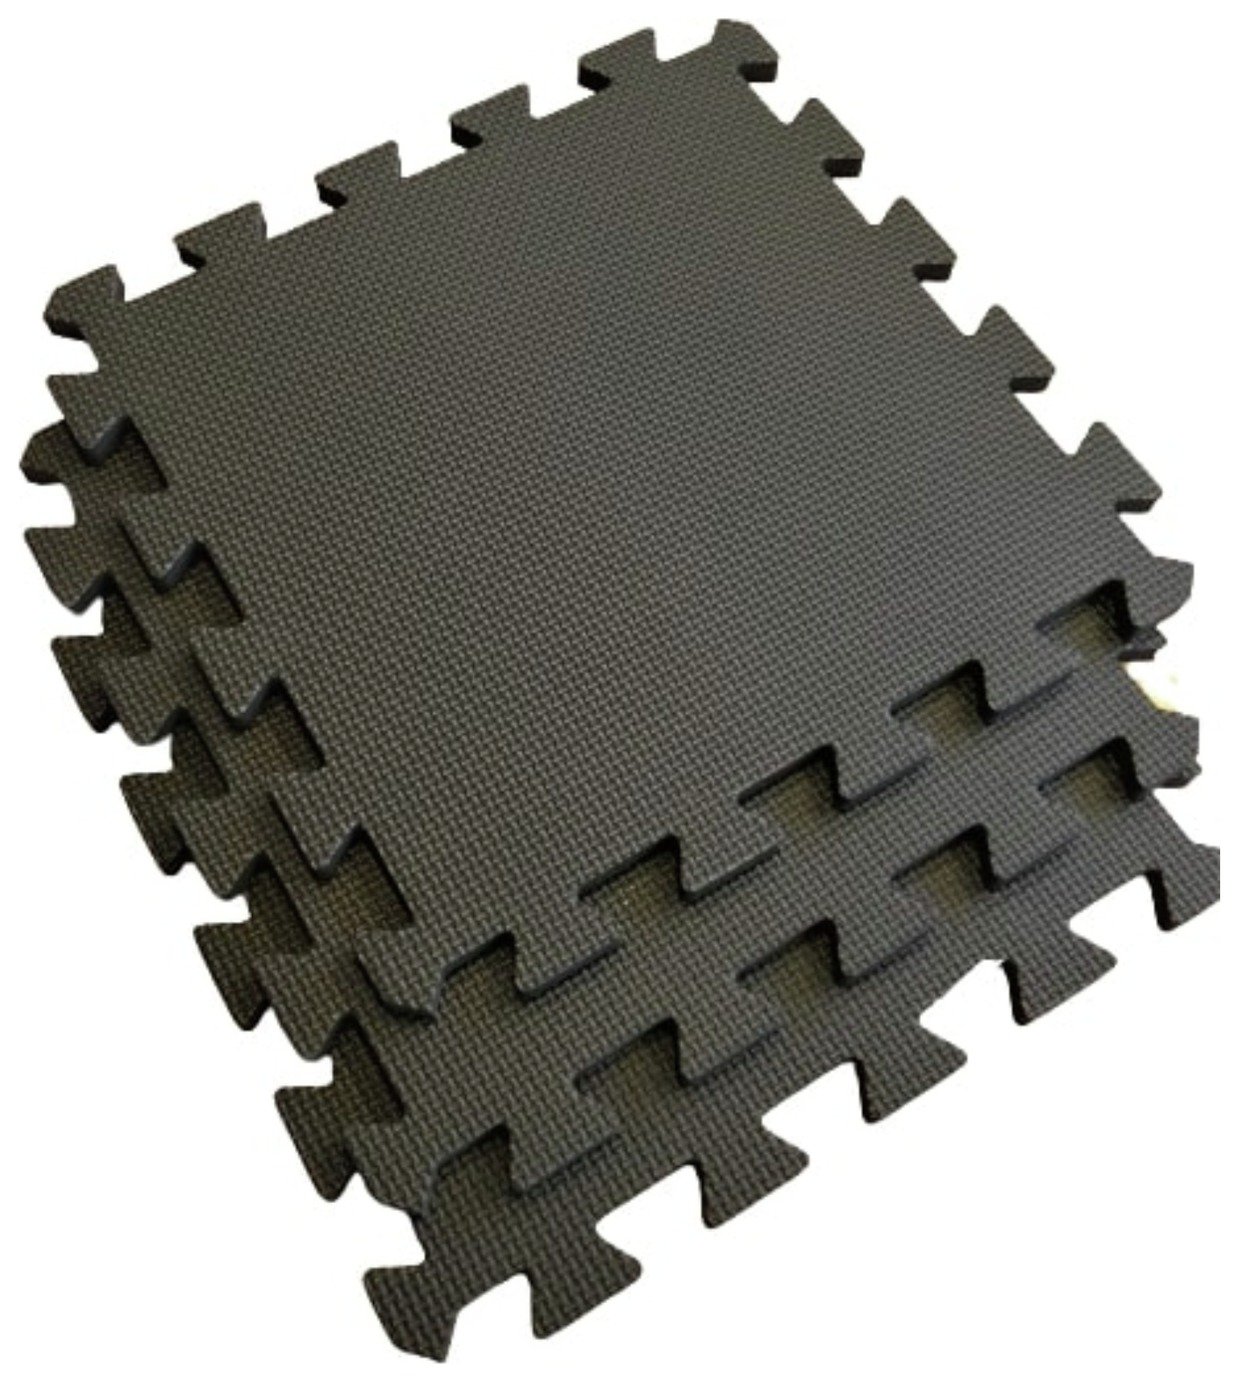 Warm Floor Plastic Floor Tiling Kit - 10 x 8ft